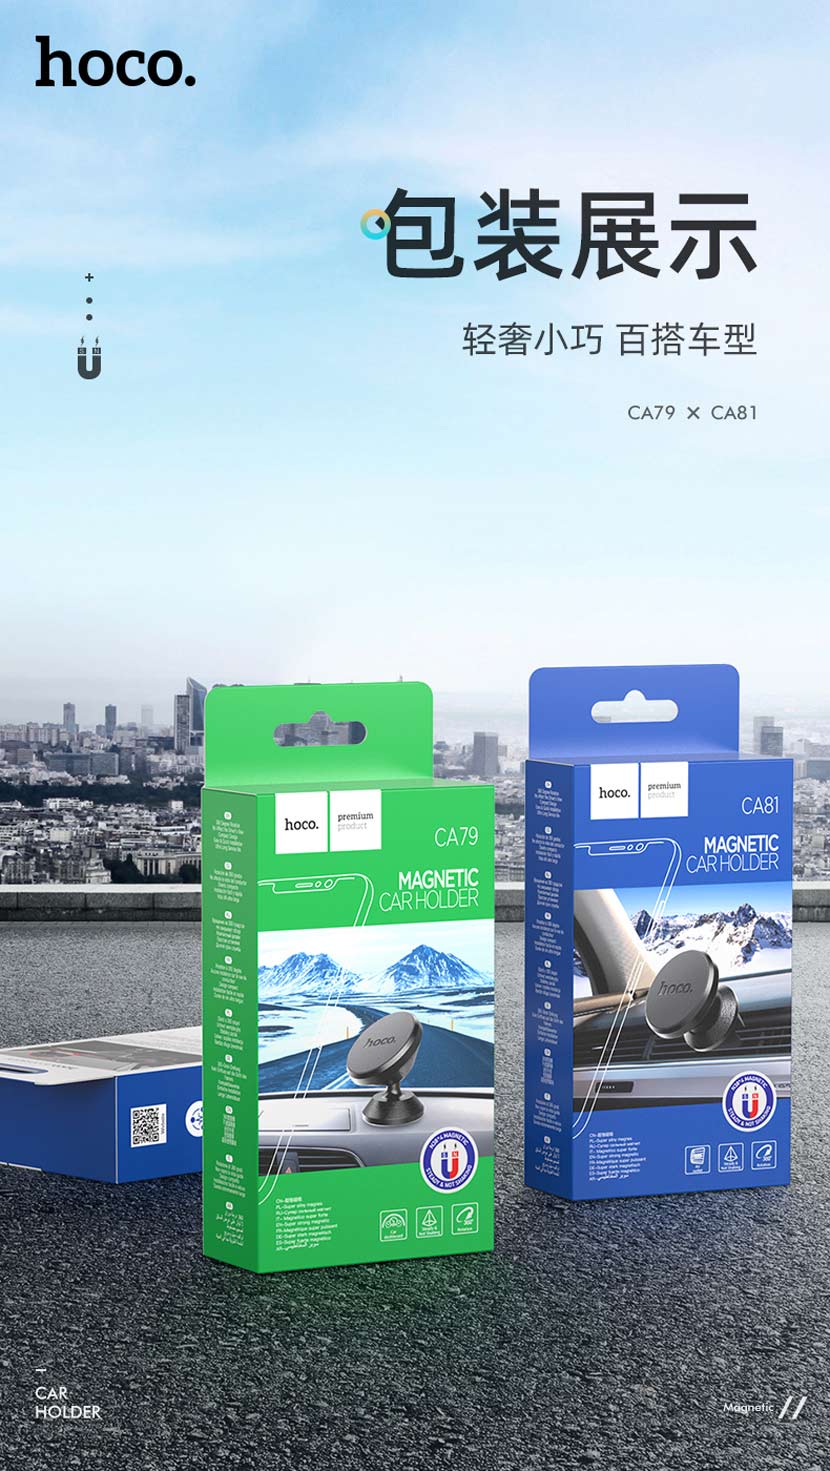 hoco news ca79 ca81 magnetic car holders package cn